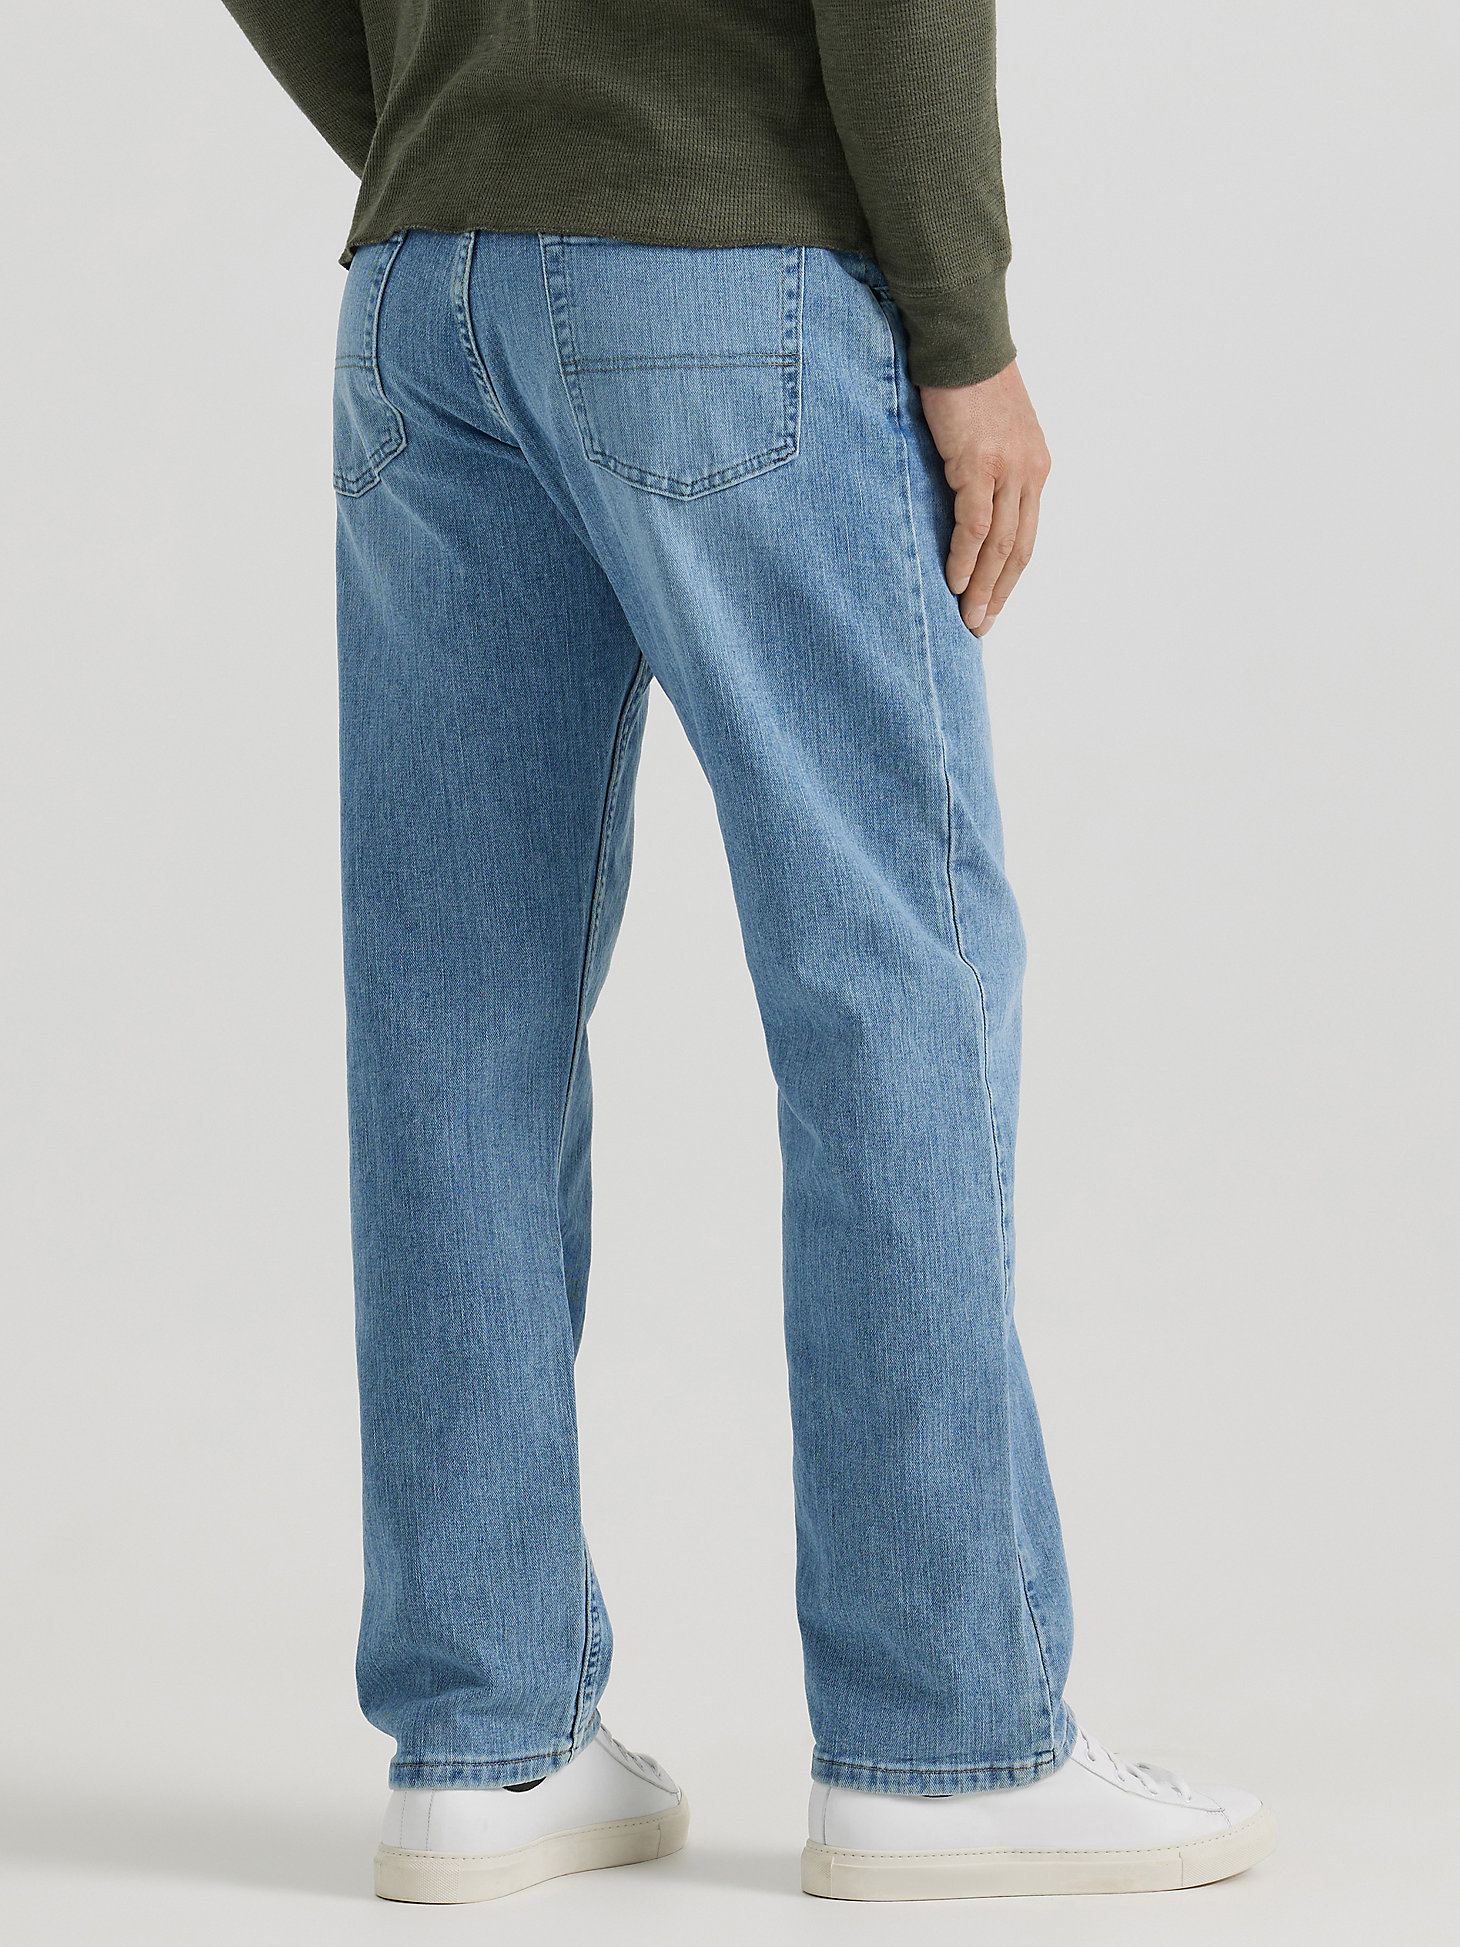 Men's Wrangler Authentics® Relaxed Fit Flex Jean in Stonewash Light alternative view 1